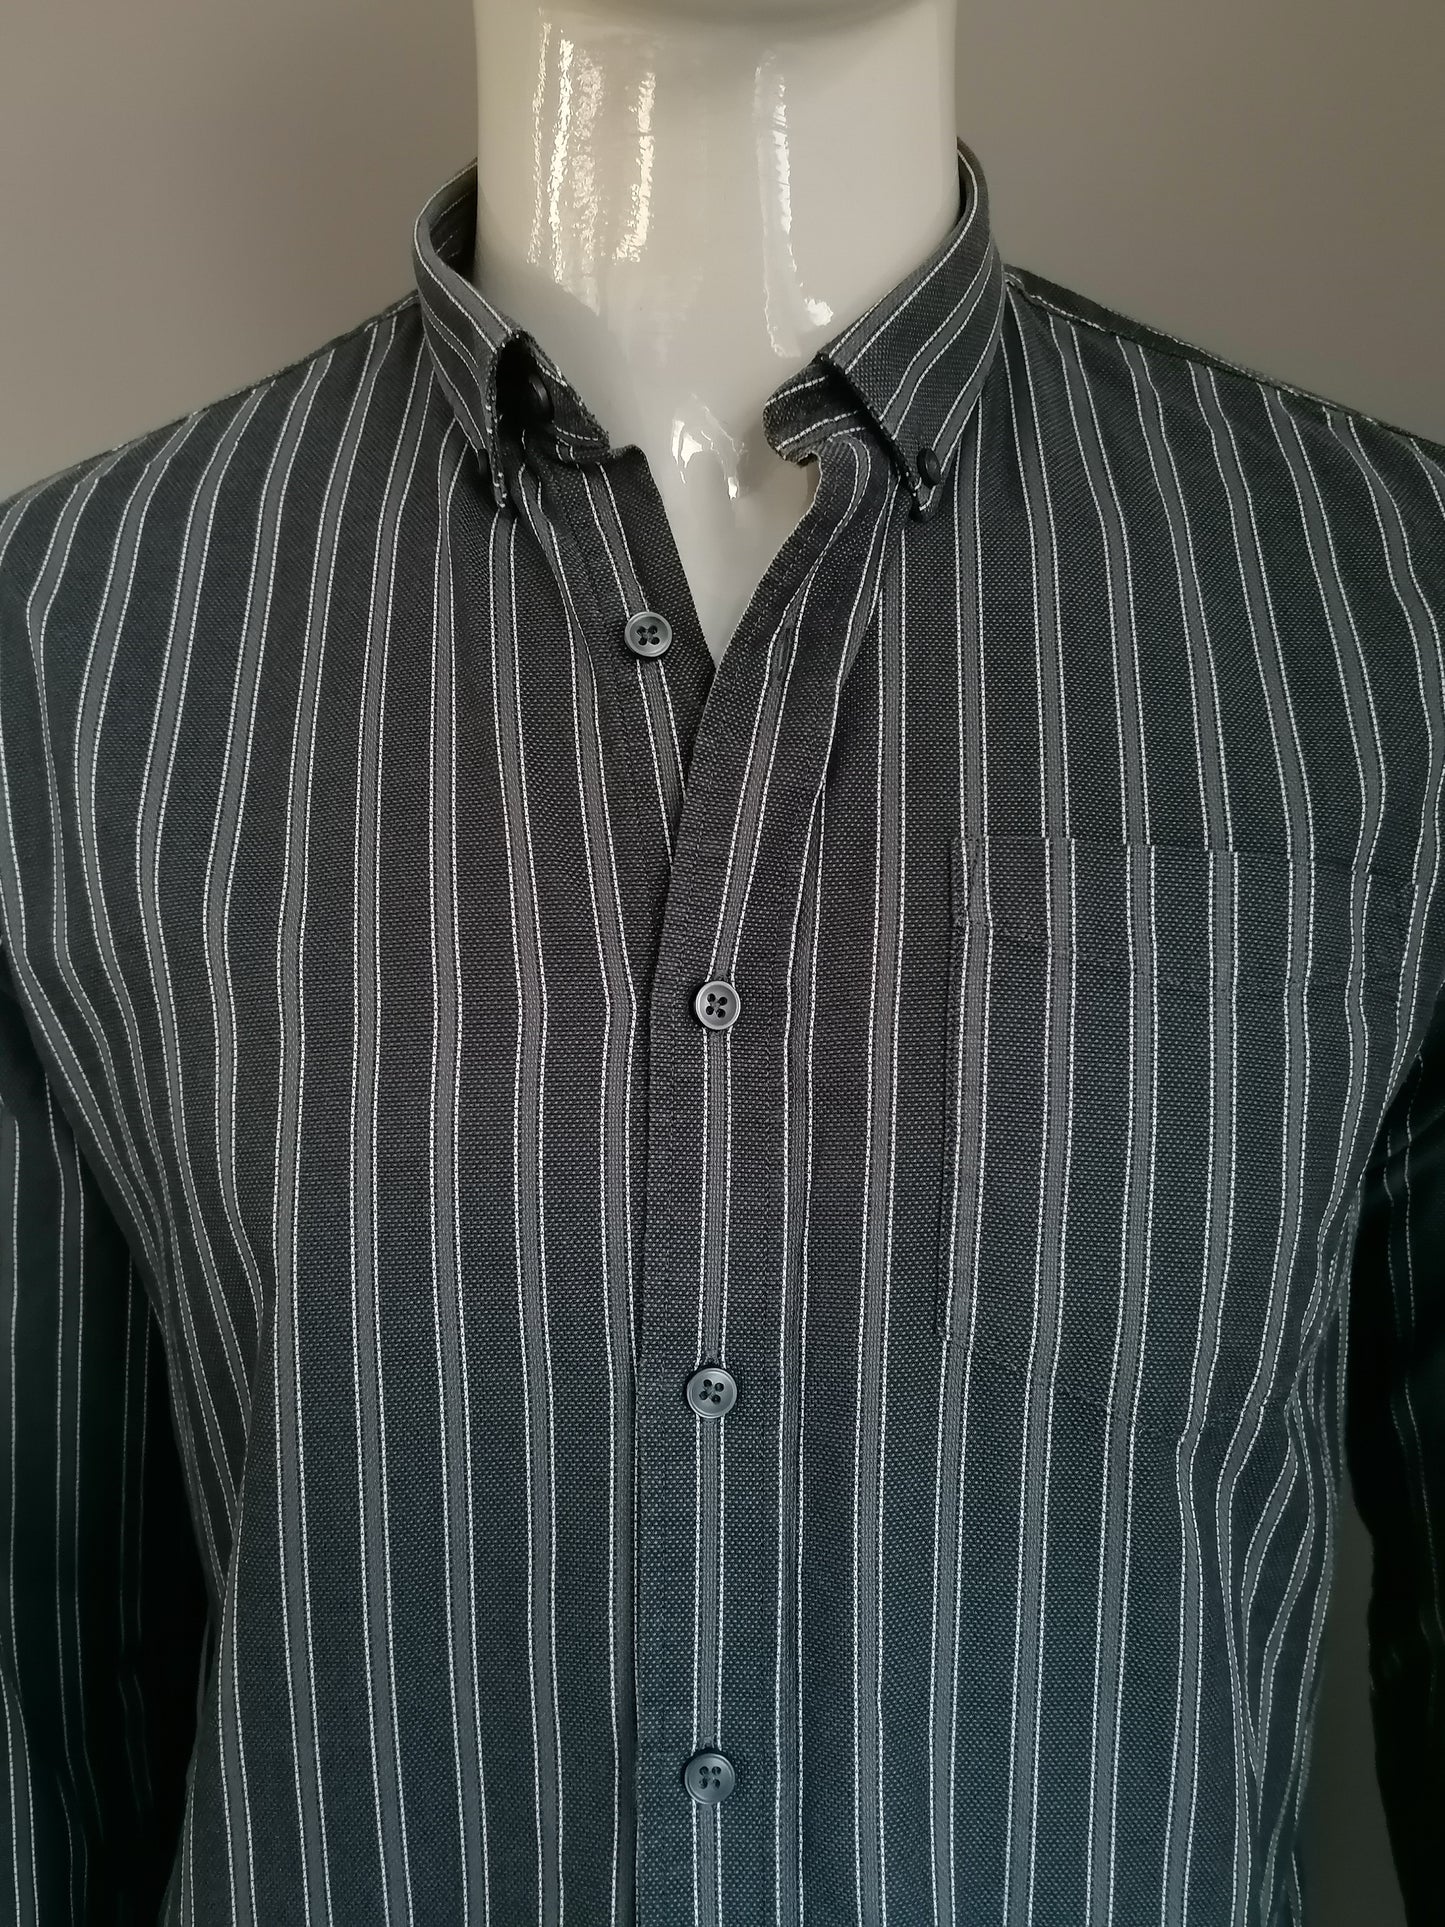 Giordano shirt. Black gray striped. Size L. Slim Fit.